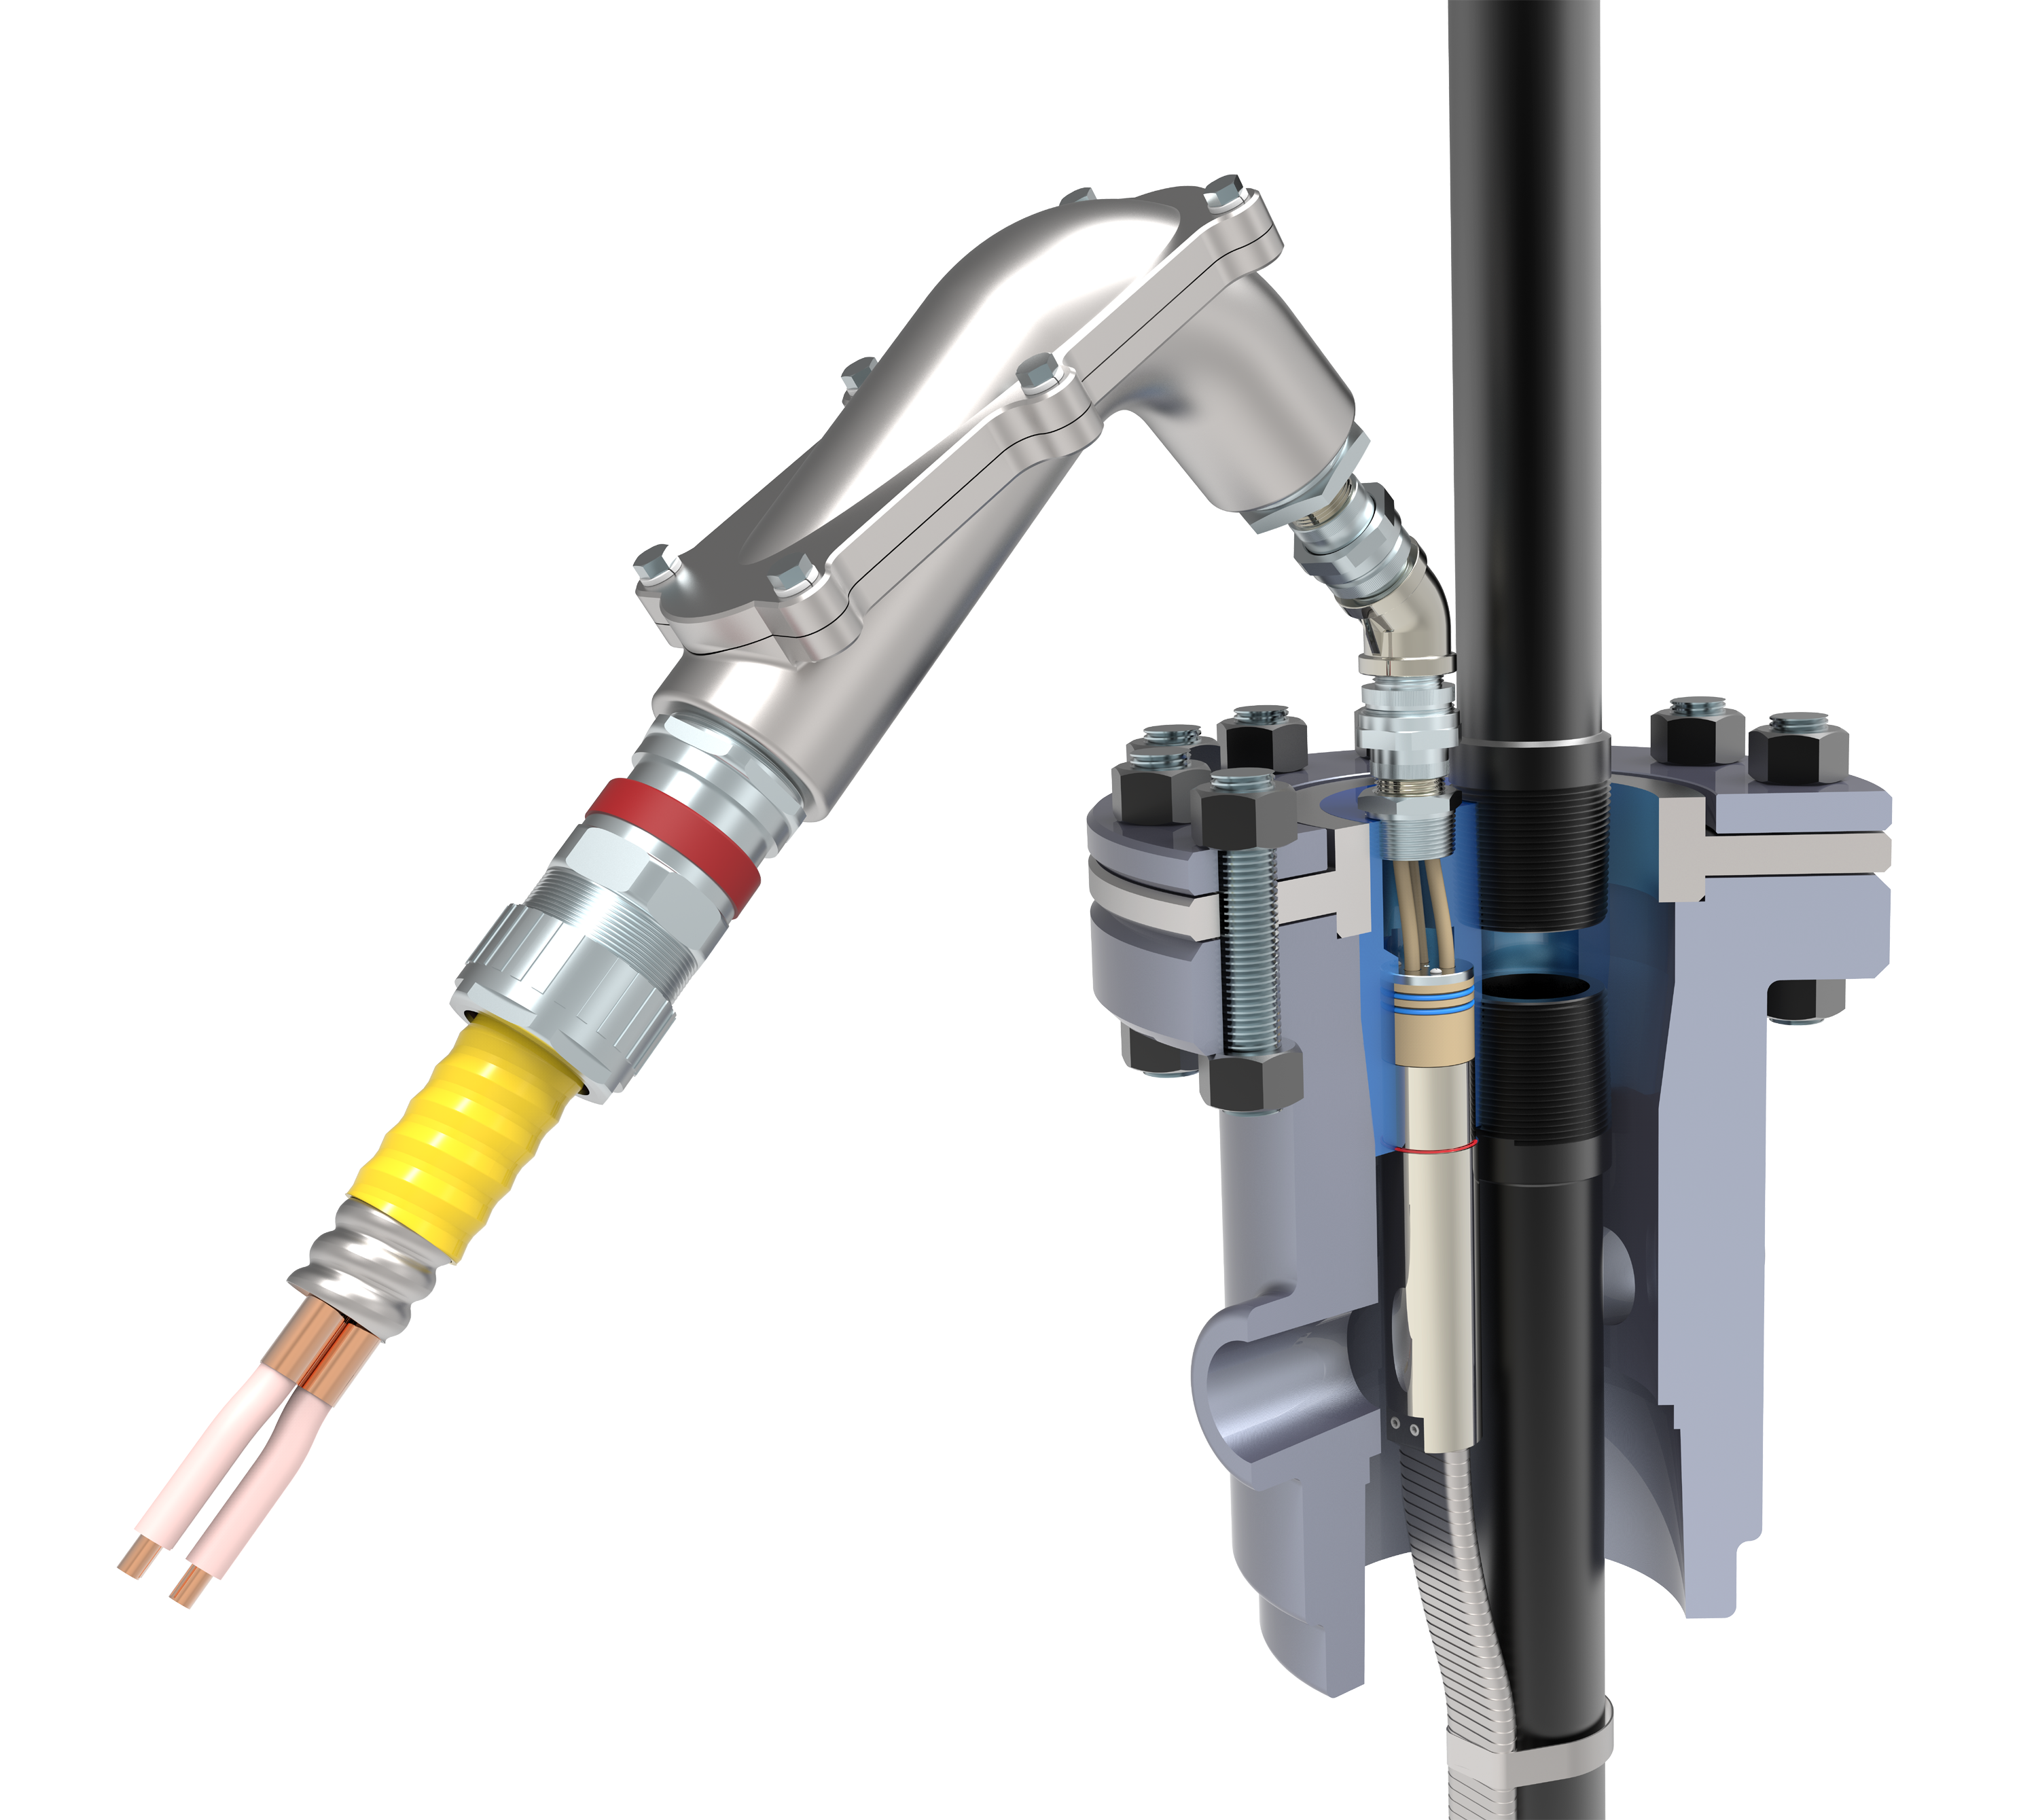 ITT BIW Connector Systems’ Uni-Lok wellhead penetrator system